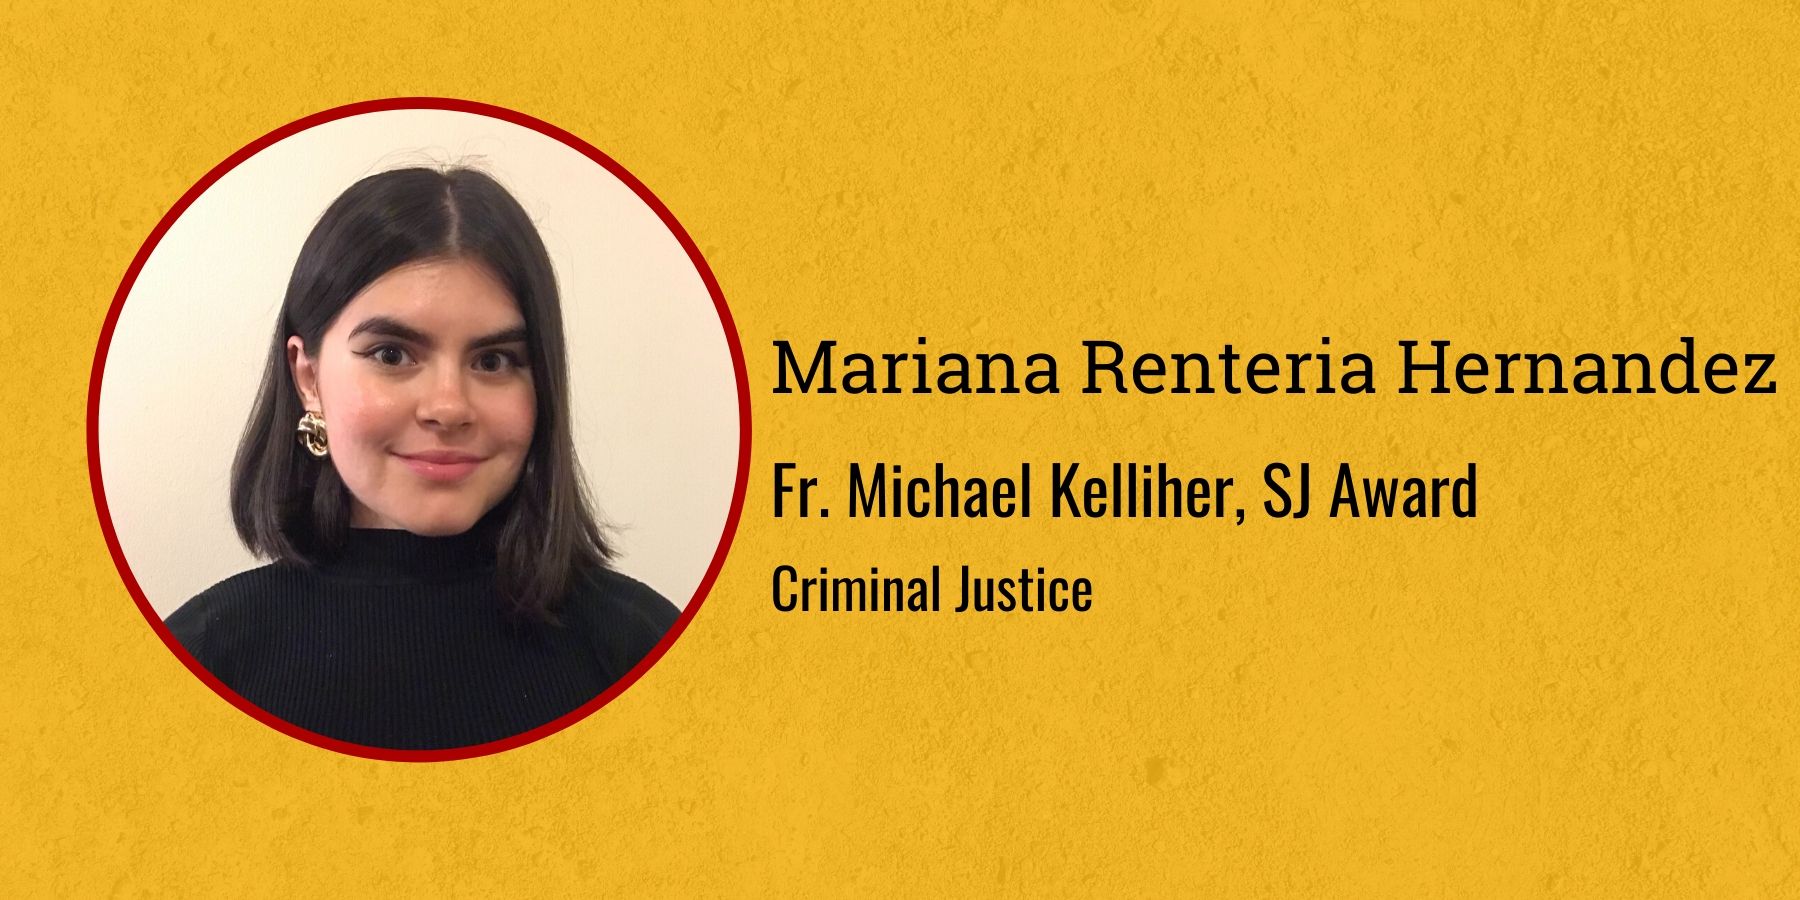 Photo of Mariana Renteria Hernandez and text Fr. Michael Keliher, SJ Award, Criminal Justice
